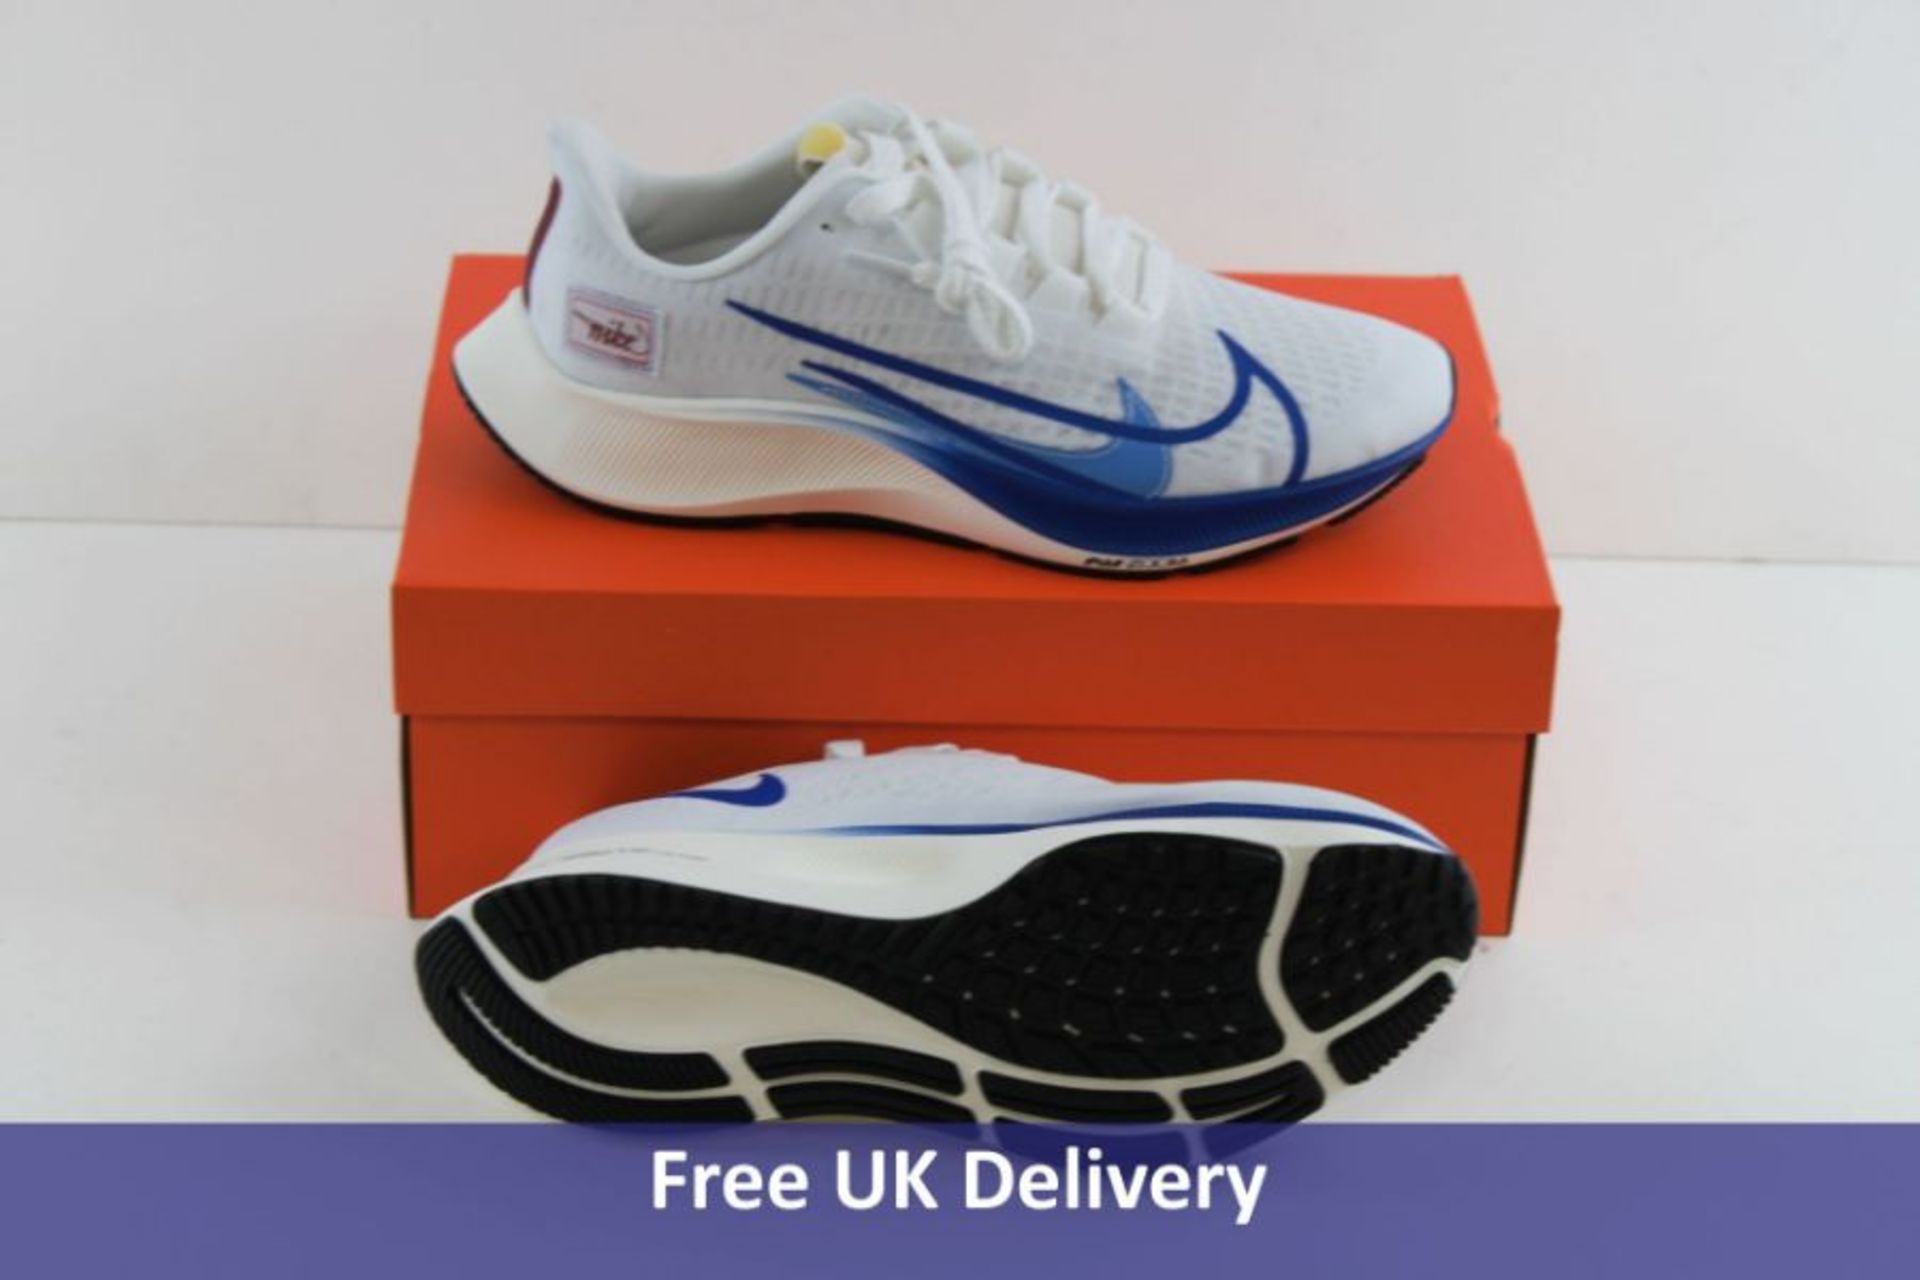 Nike Men's Air Zoom Pegasus 37 Premium Trainers, White And Blue, UK 7.5